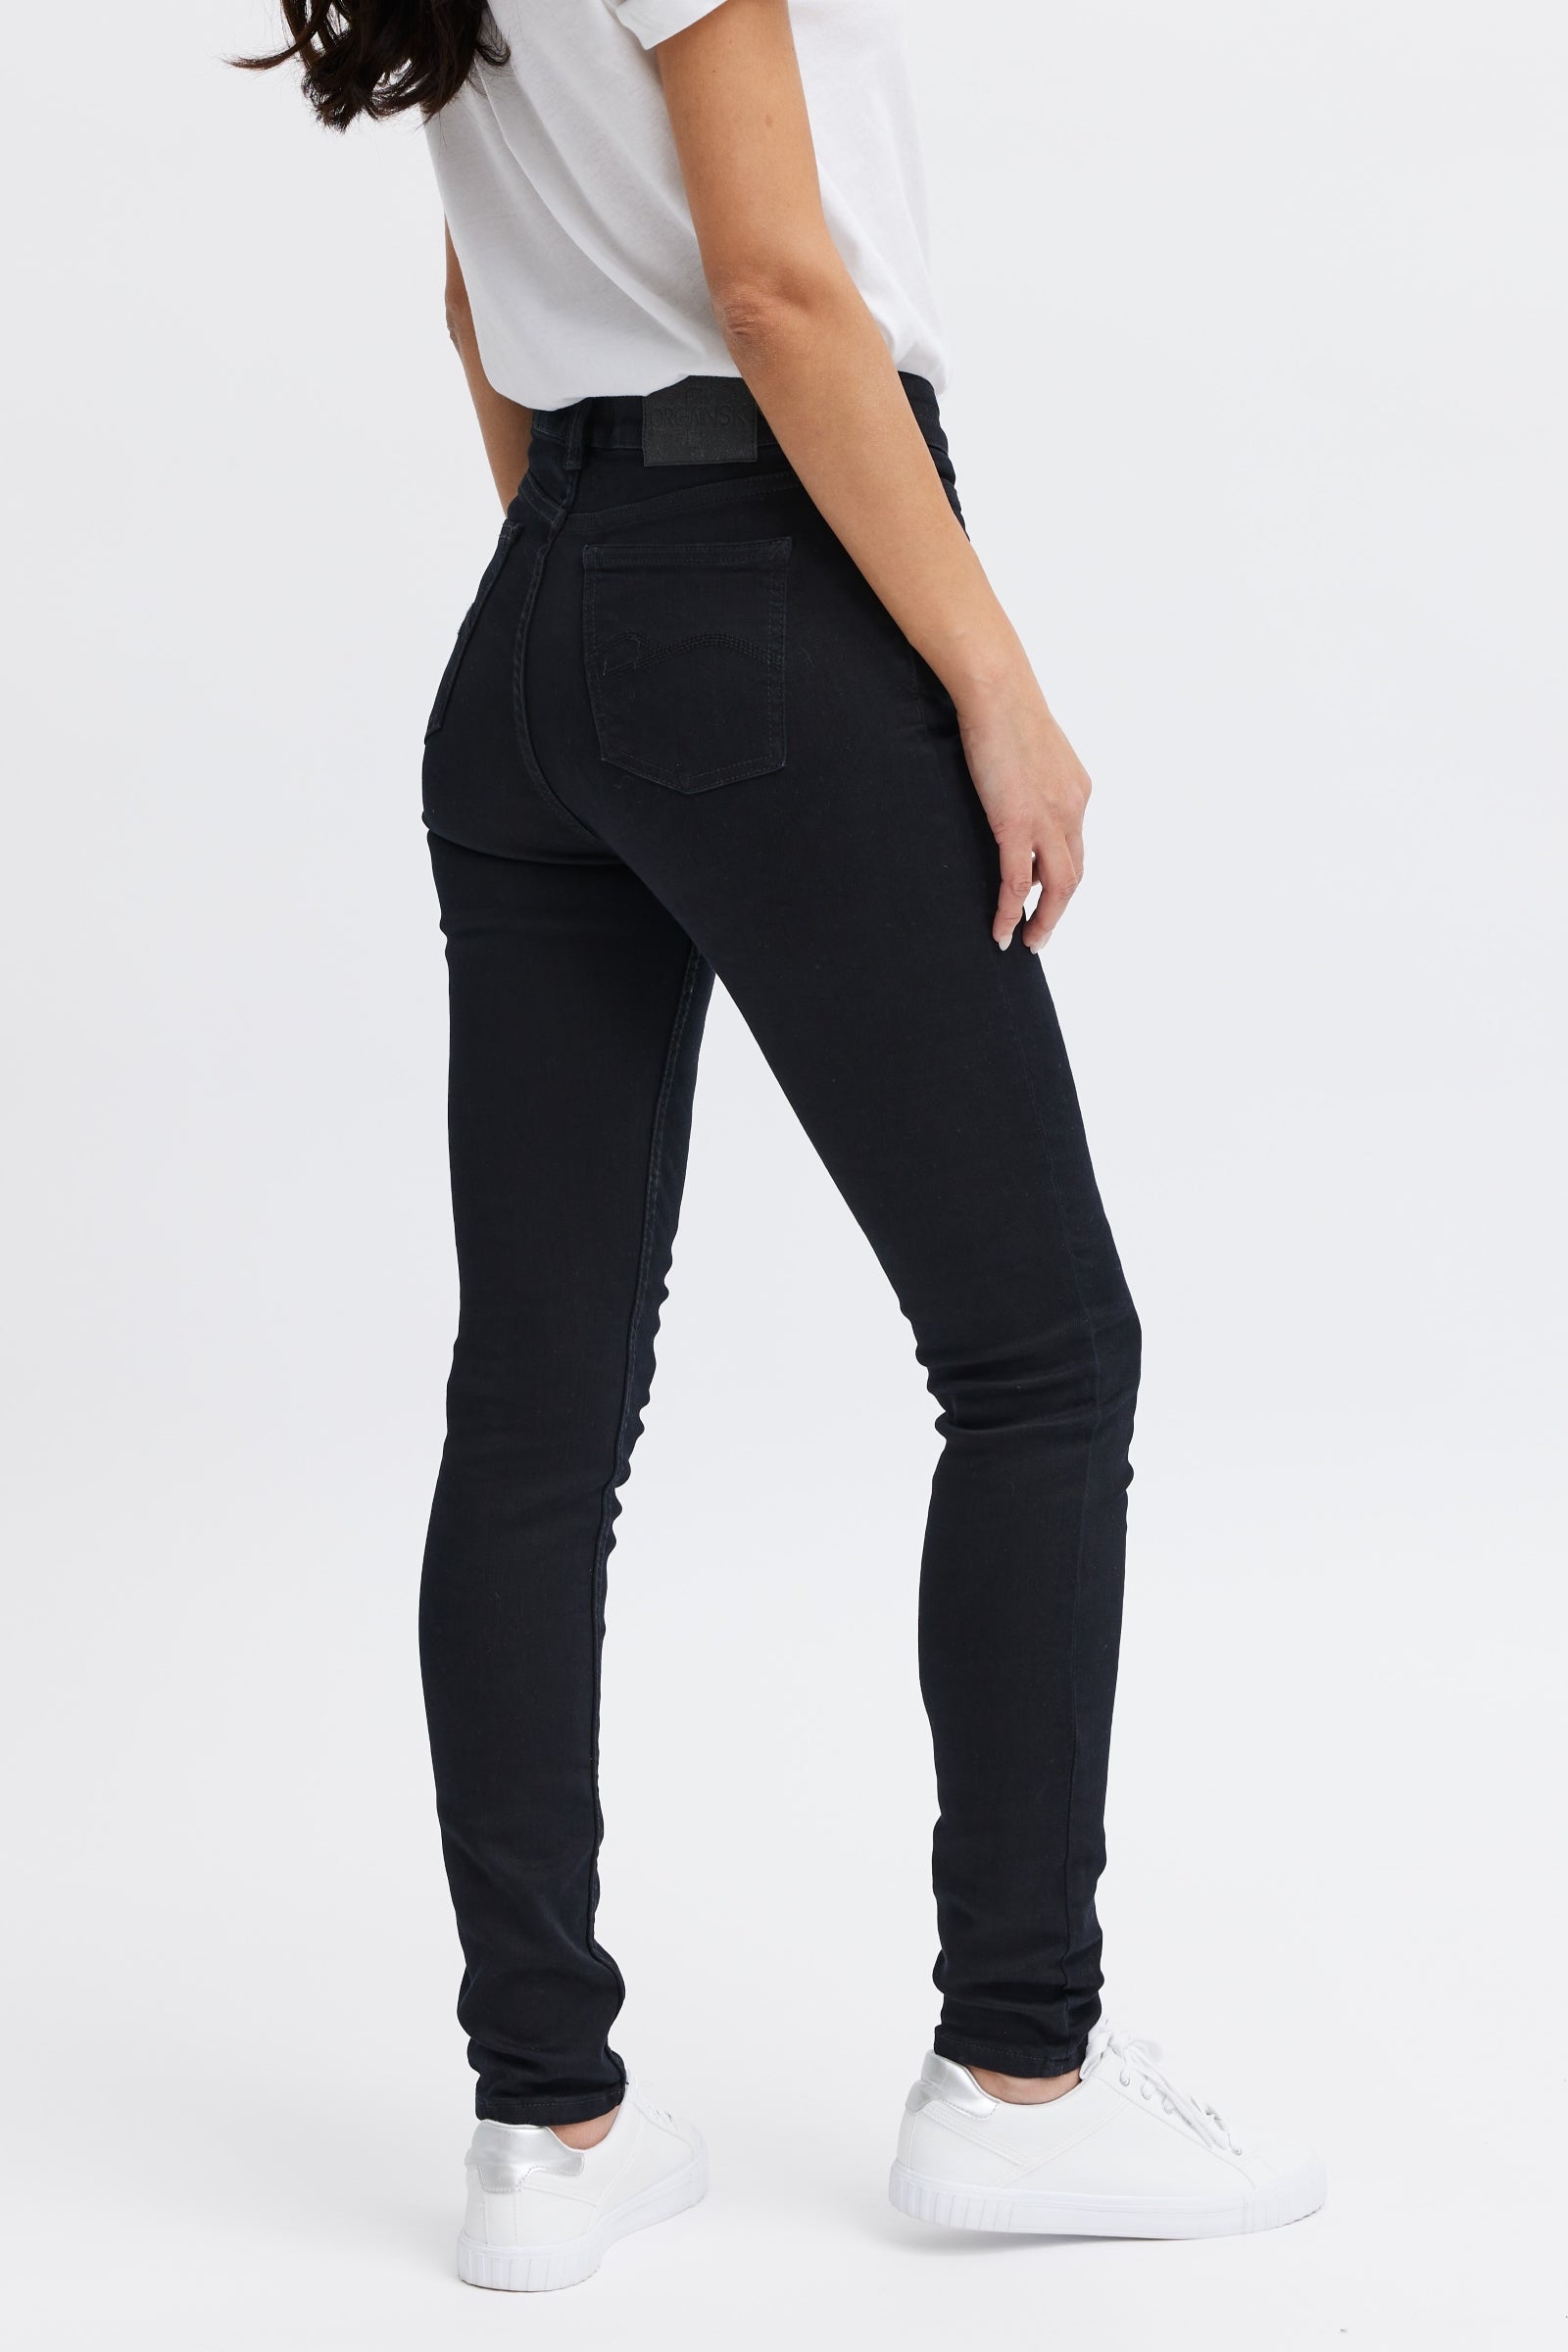 Black Jeans Lease